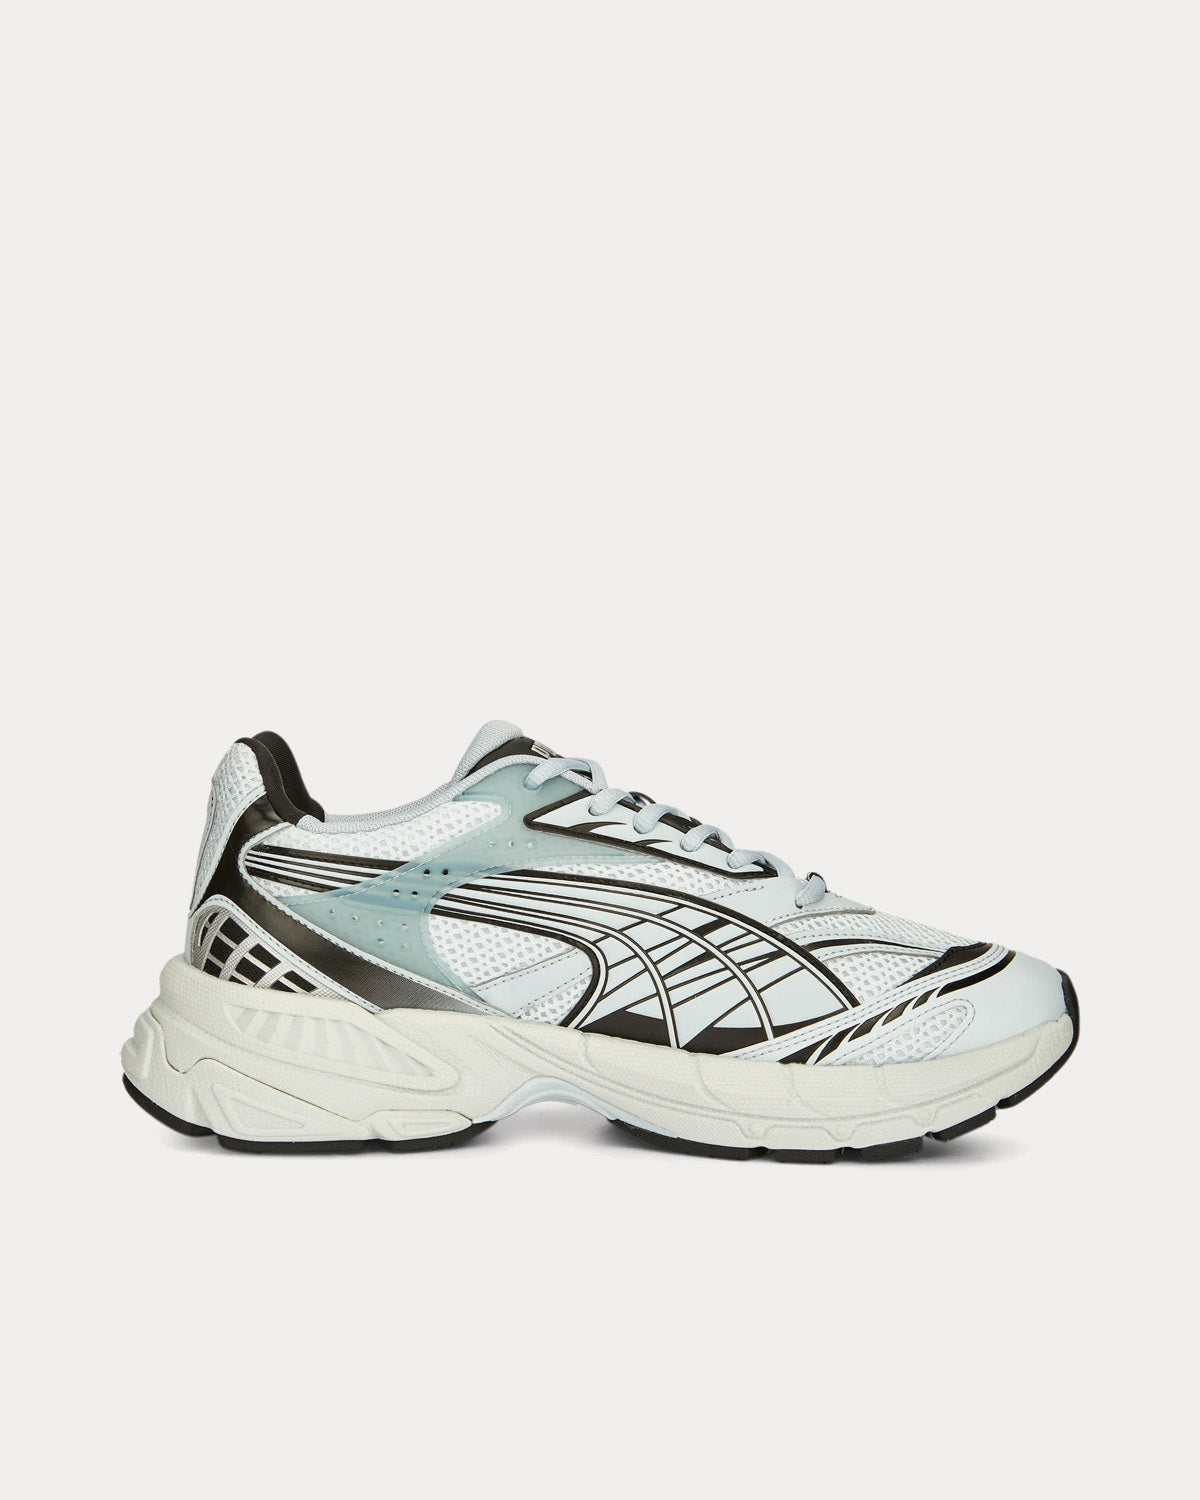 Puma - Velophasis Technisch Platinum Gray / Black Low Top Sneakers